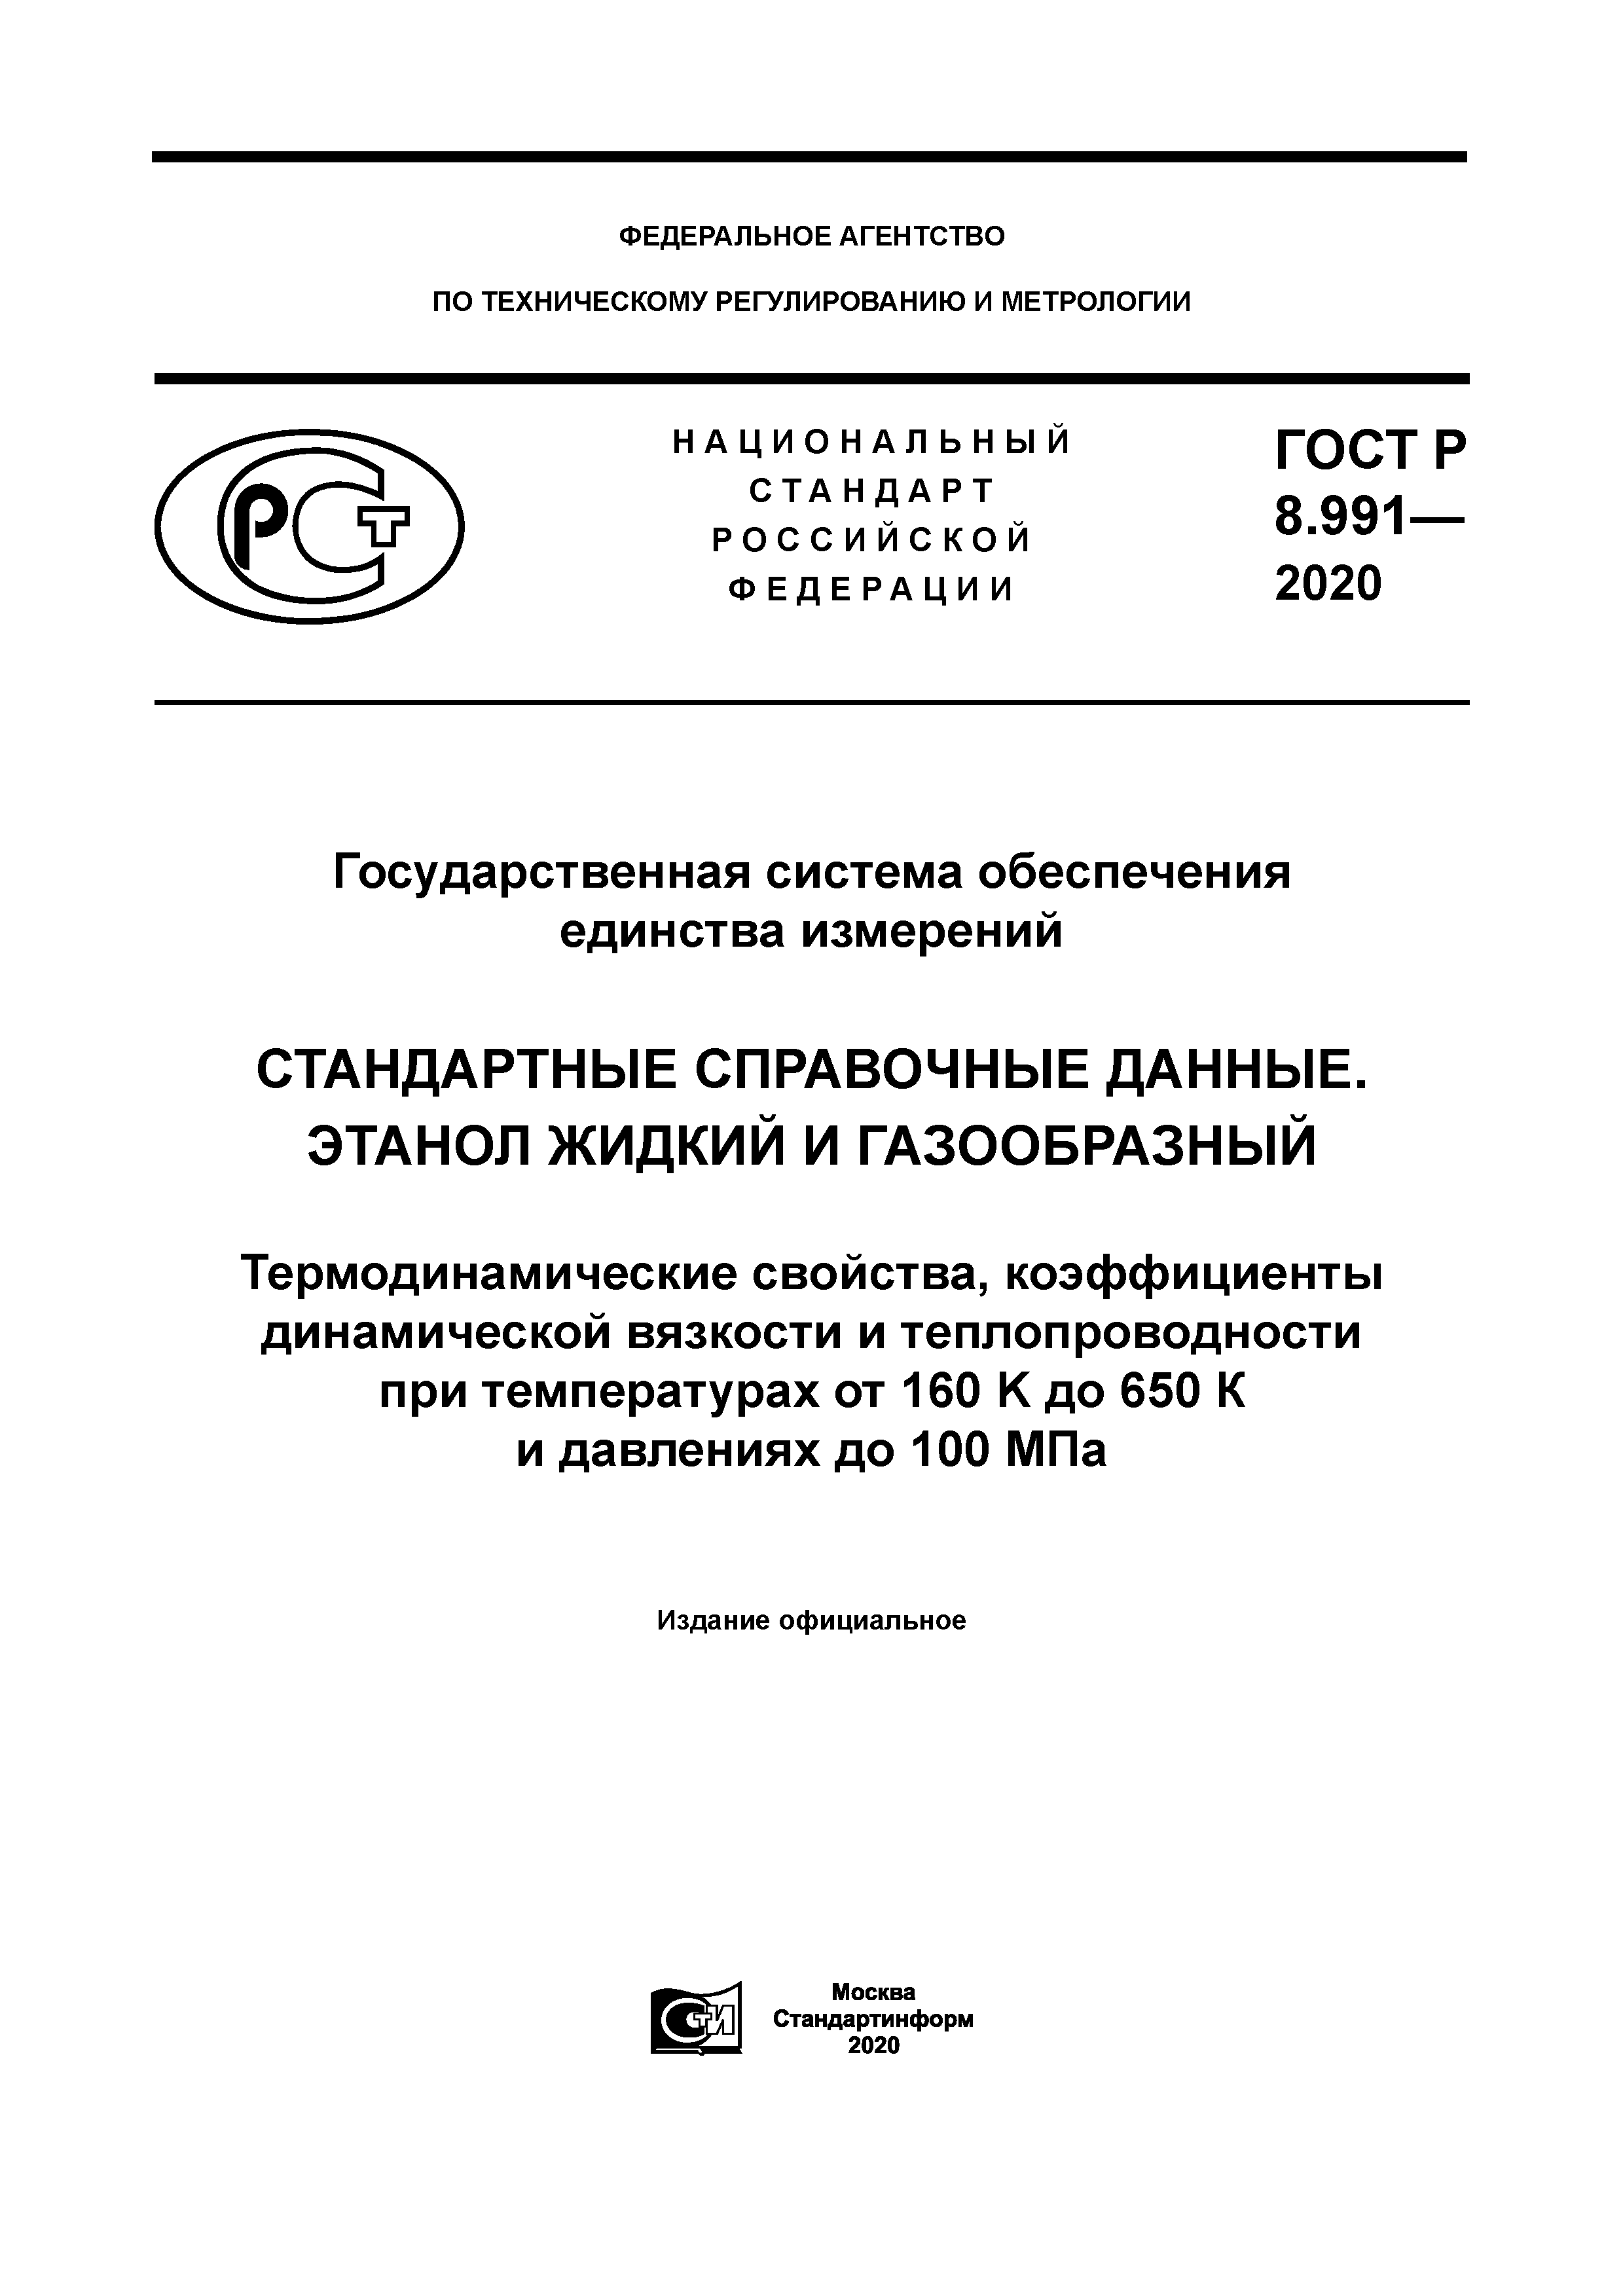 ГОСТ Р 8.991-2020